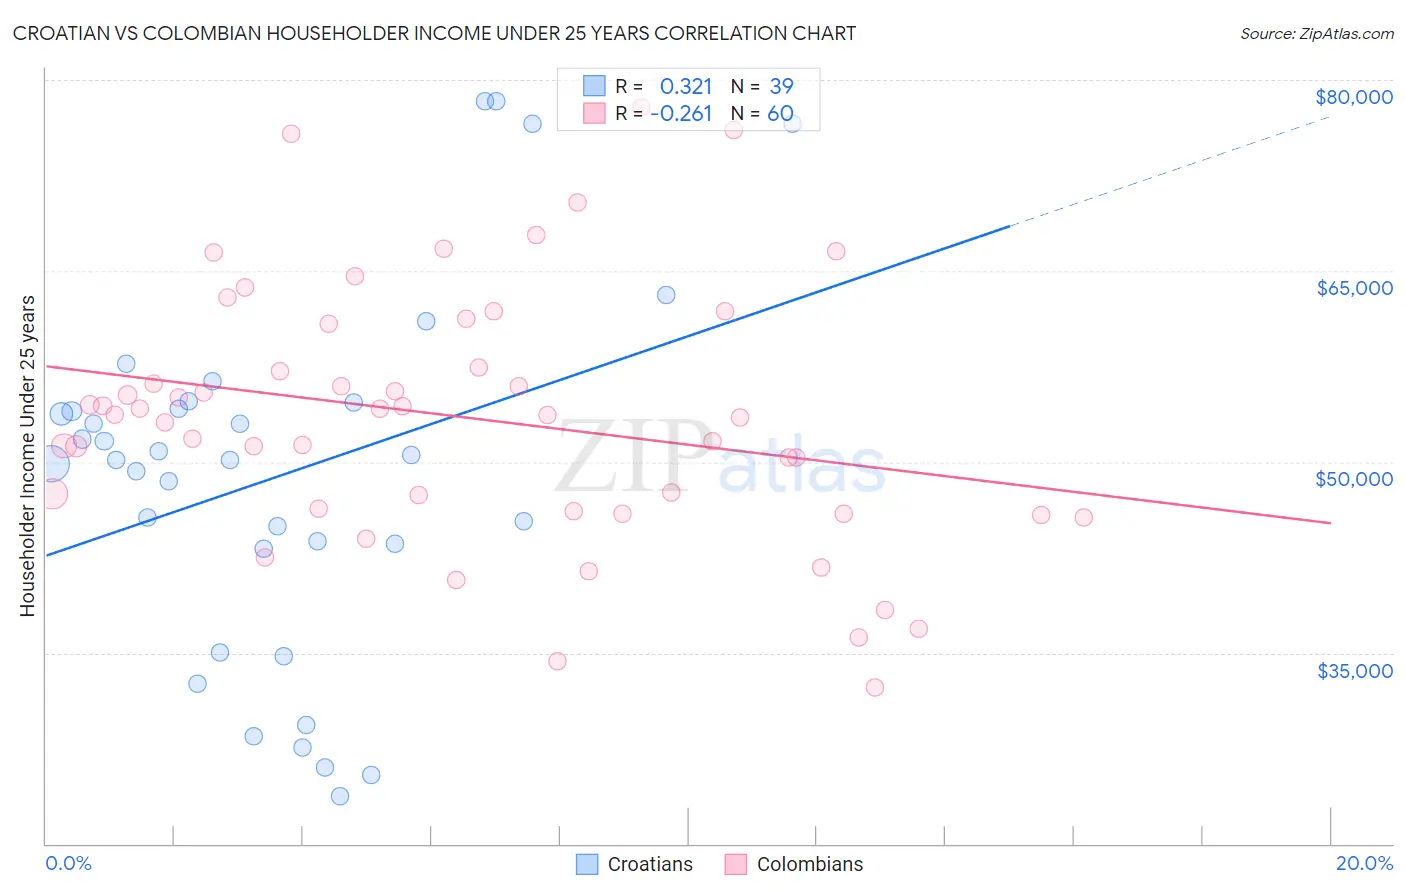 Croatian vs Colombian Householder Income Under 25 years